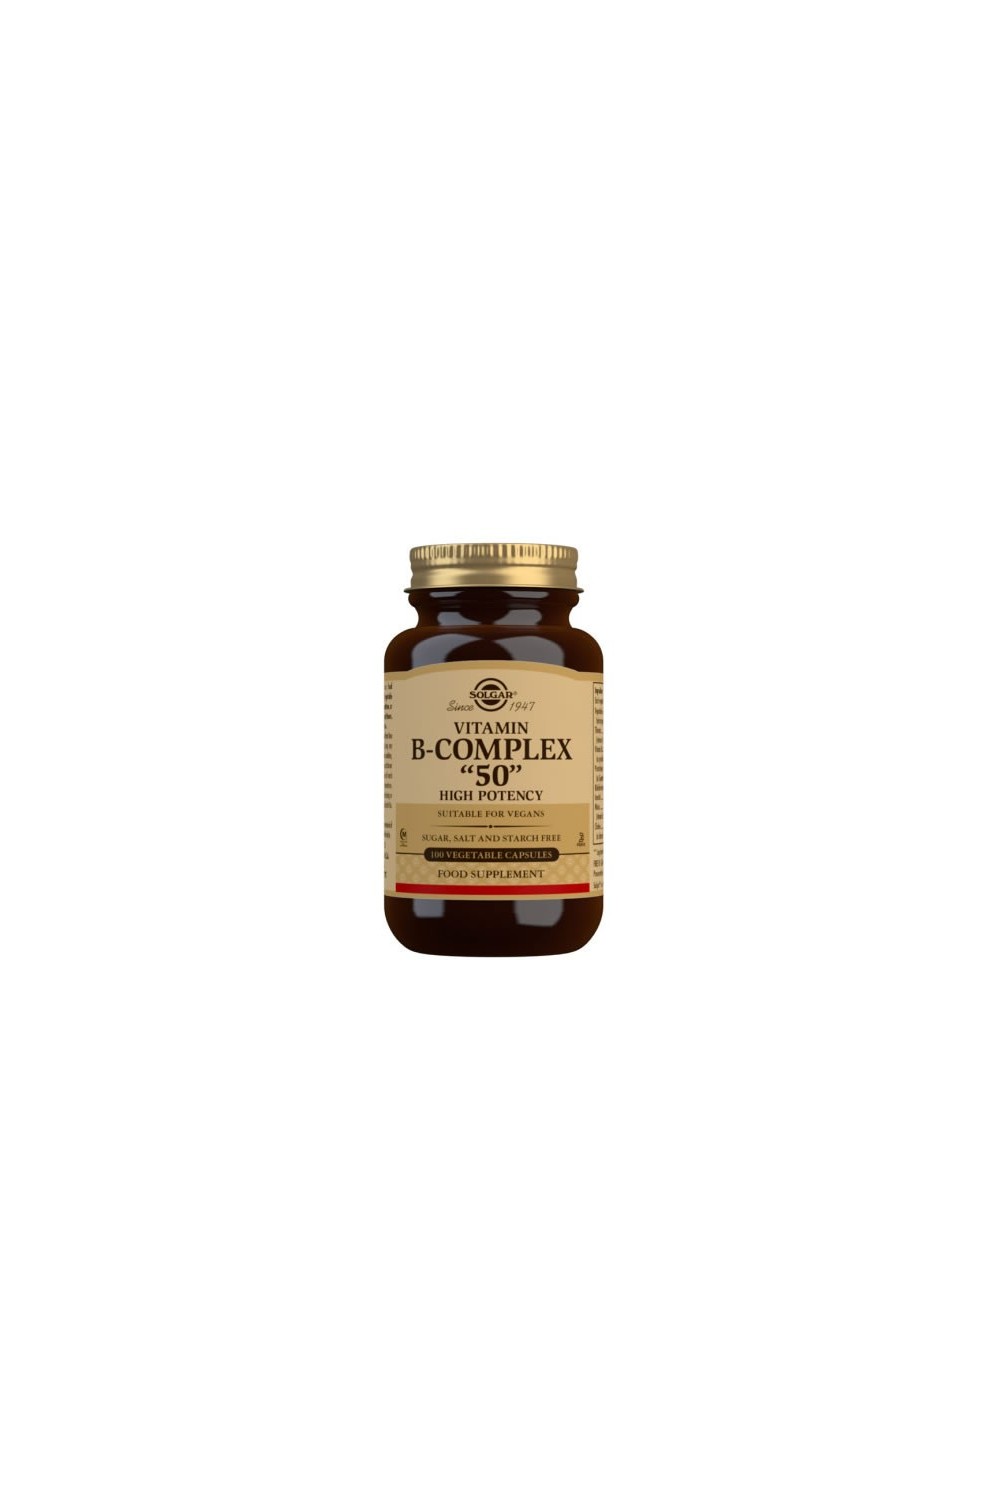 Solgar Vitamin B-Complex "50" High Potency - 100 Vegetable Capsules